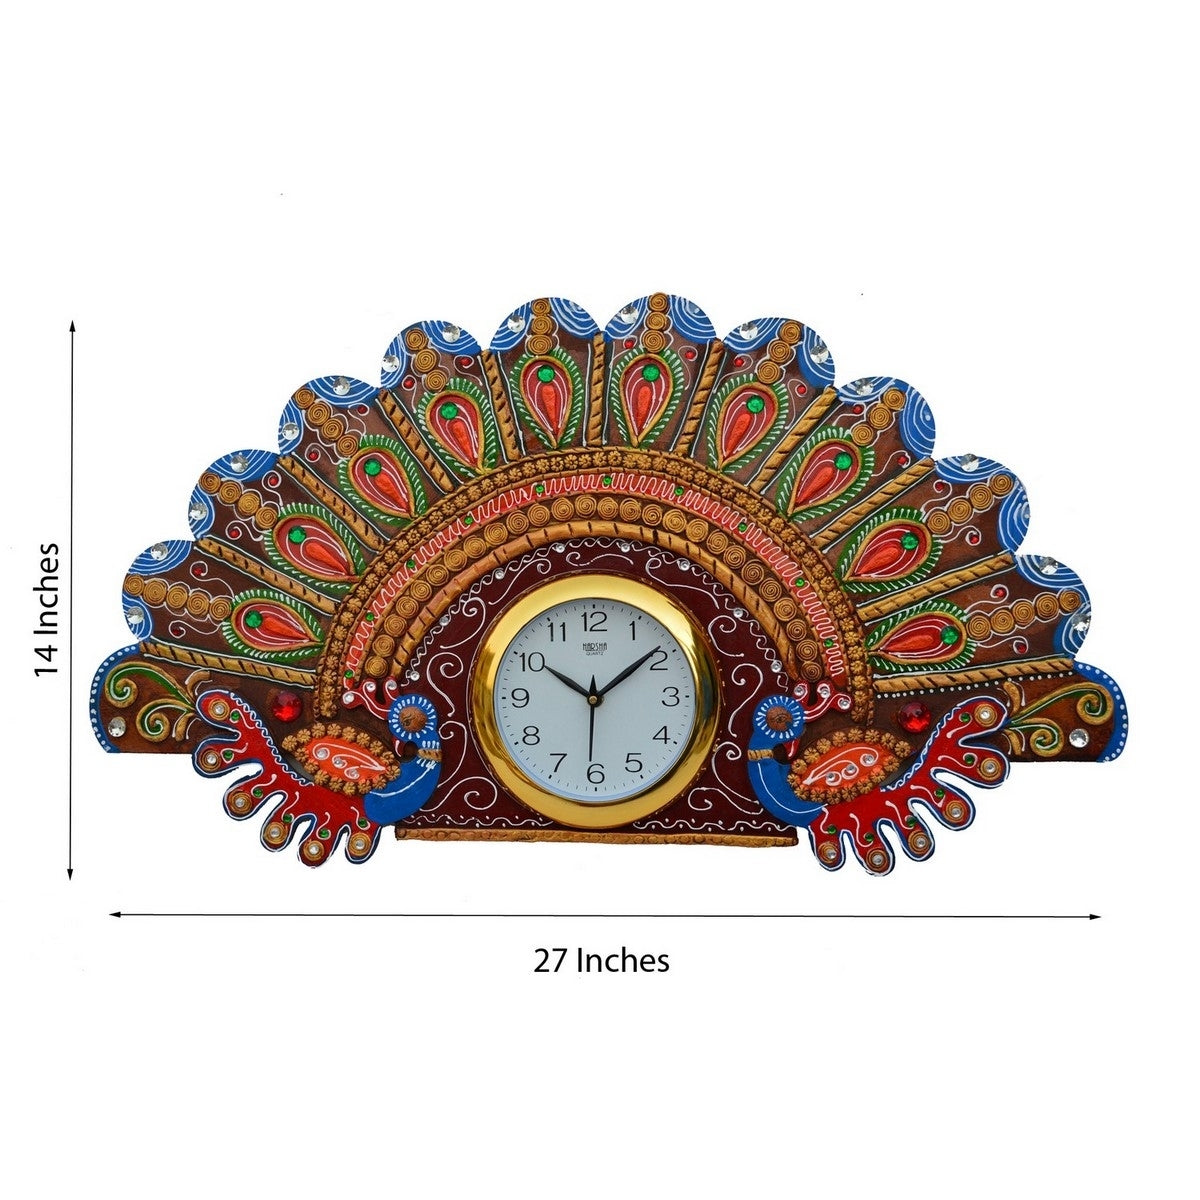 Papier-Mache Peacock Design Handcrafted Wall Clock 1